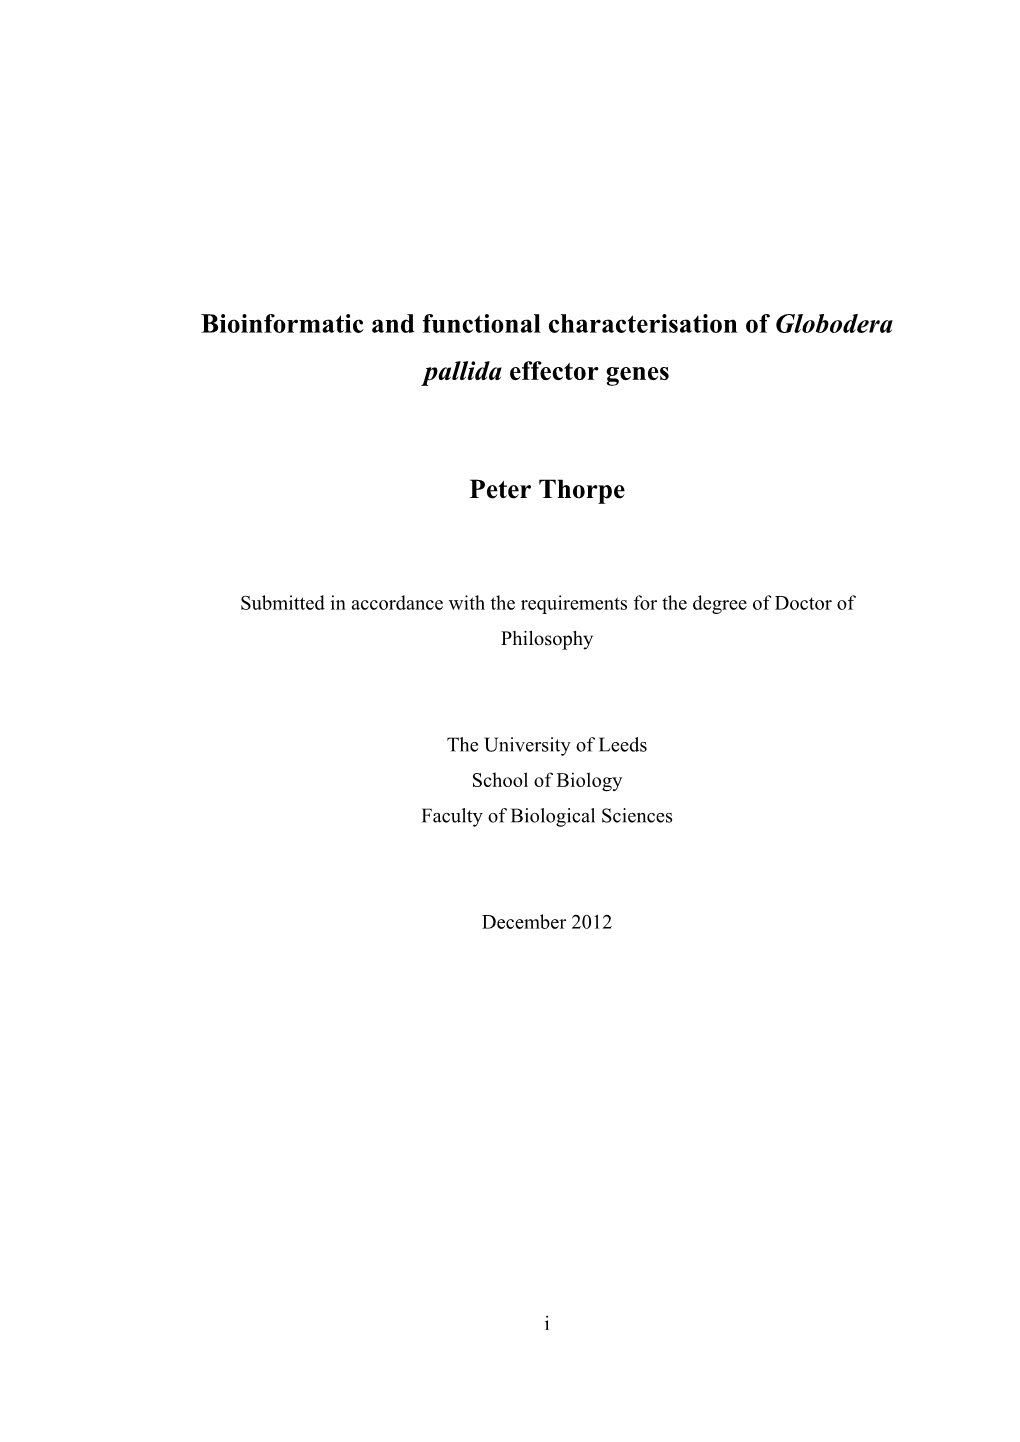 Bioinformatic and Functional Characterisation of Globodera Pallida Effector Genes